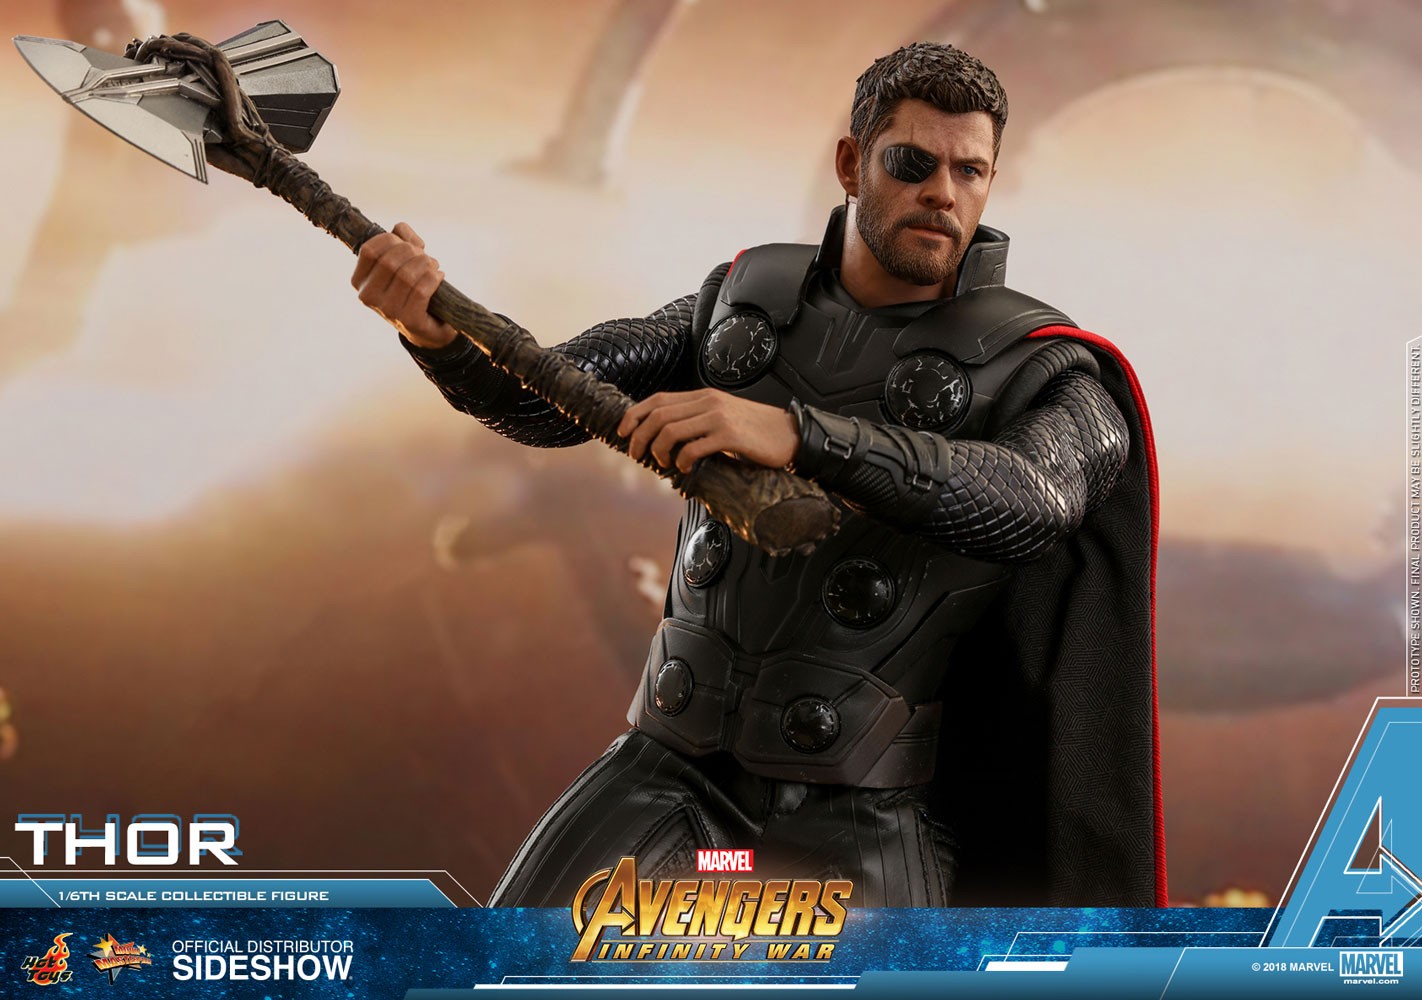 Thor - Avengers: Infinity War